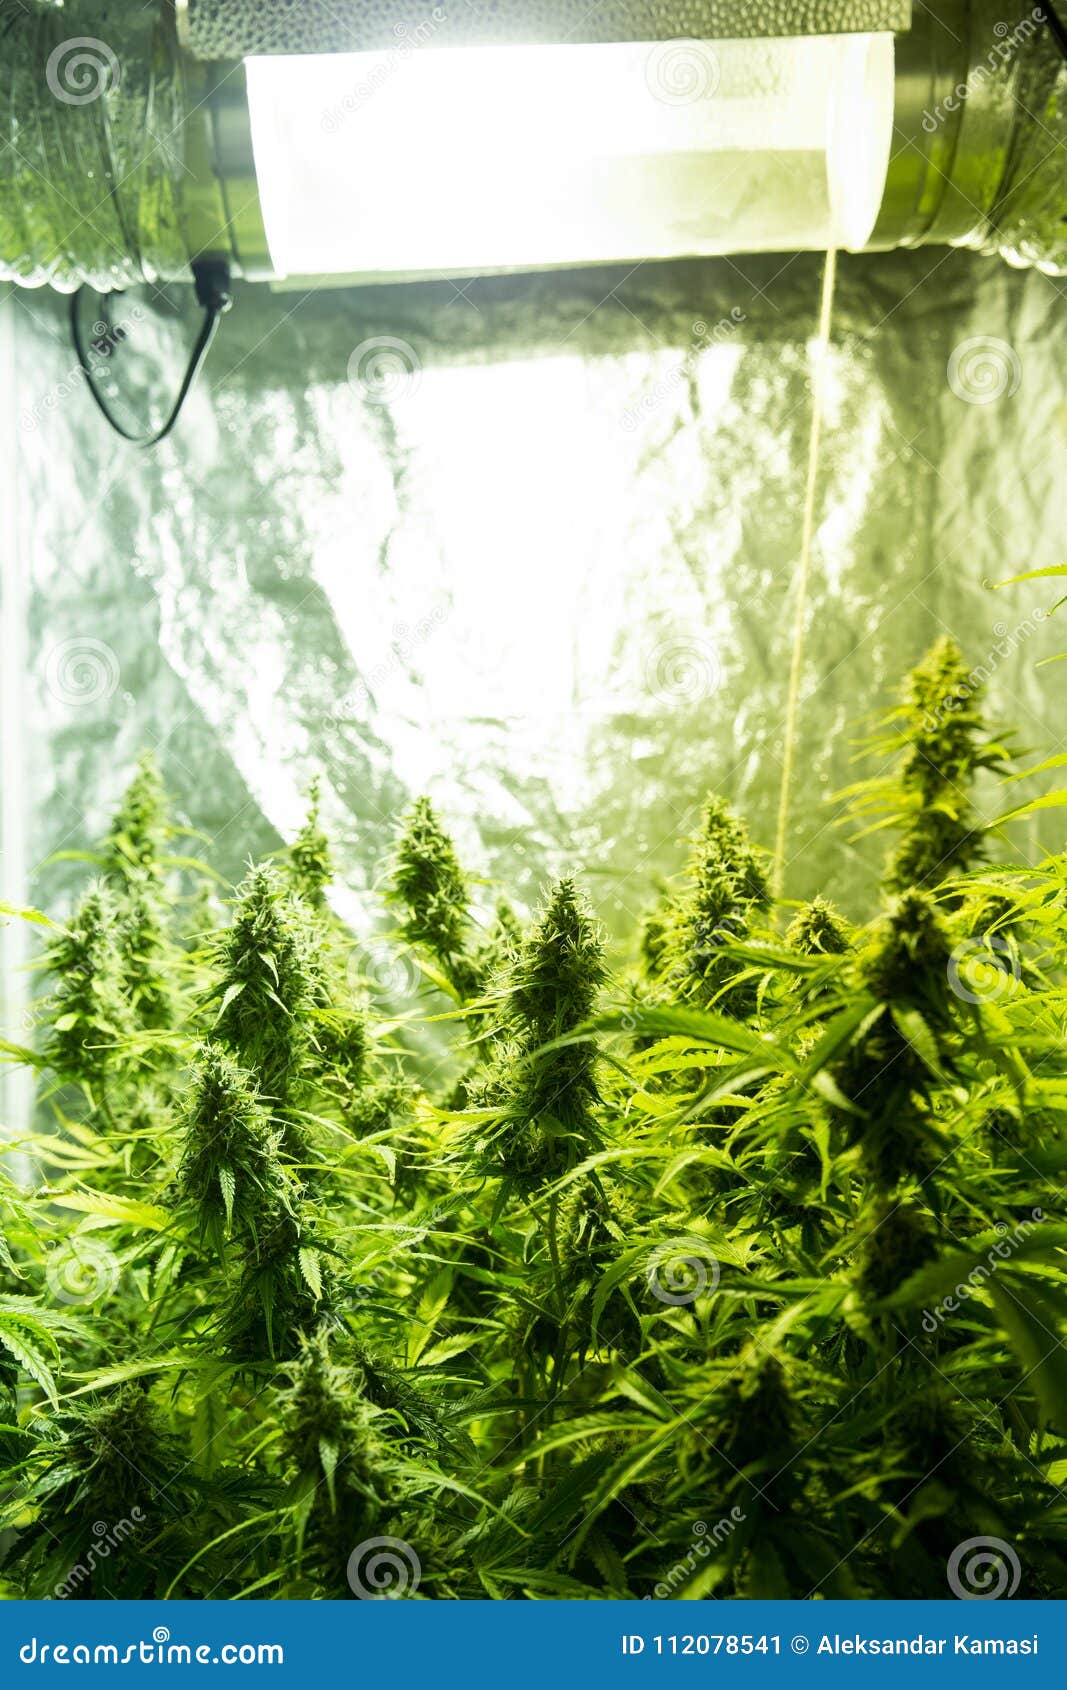 Cannabis Indoor Cultivation Cannabis Grow Box Stock Image